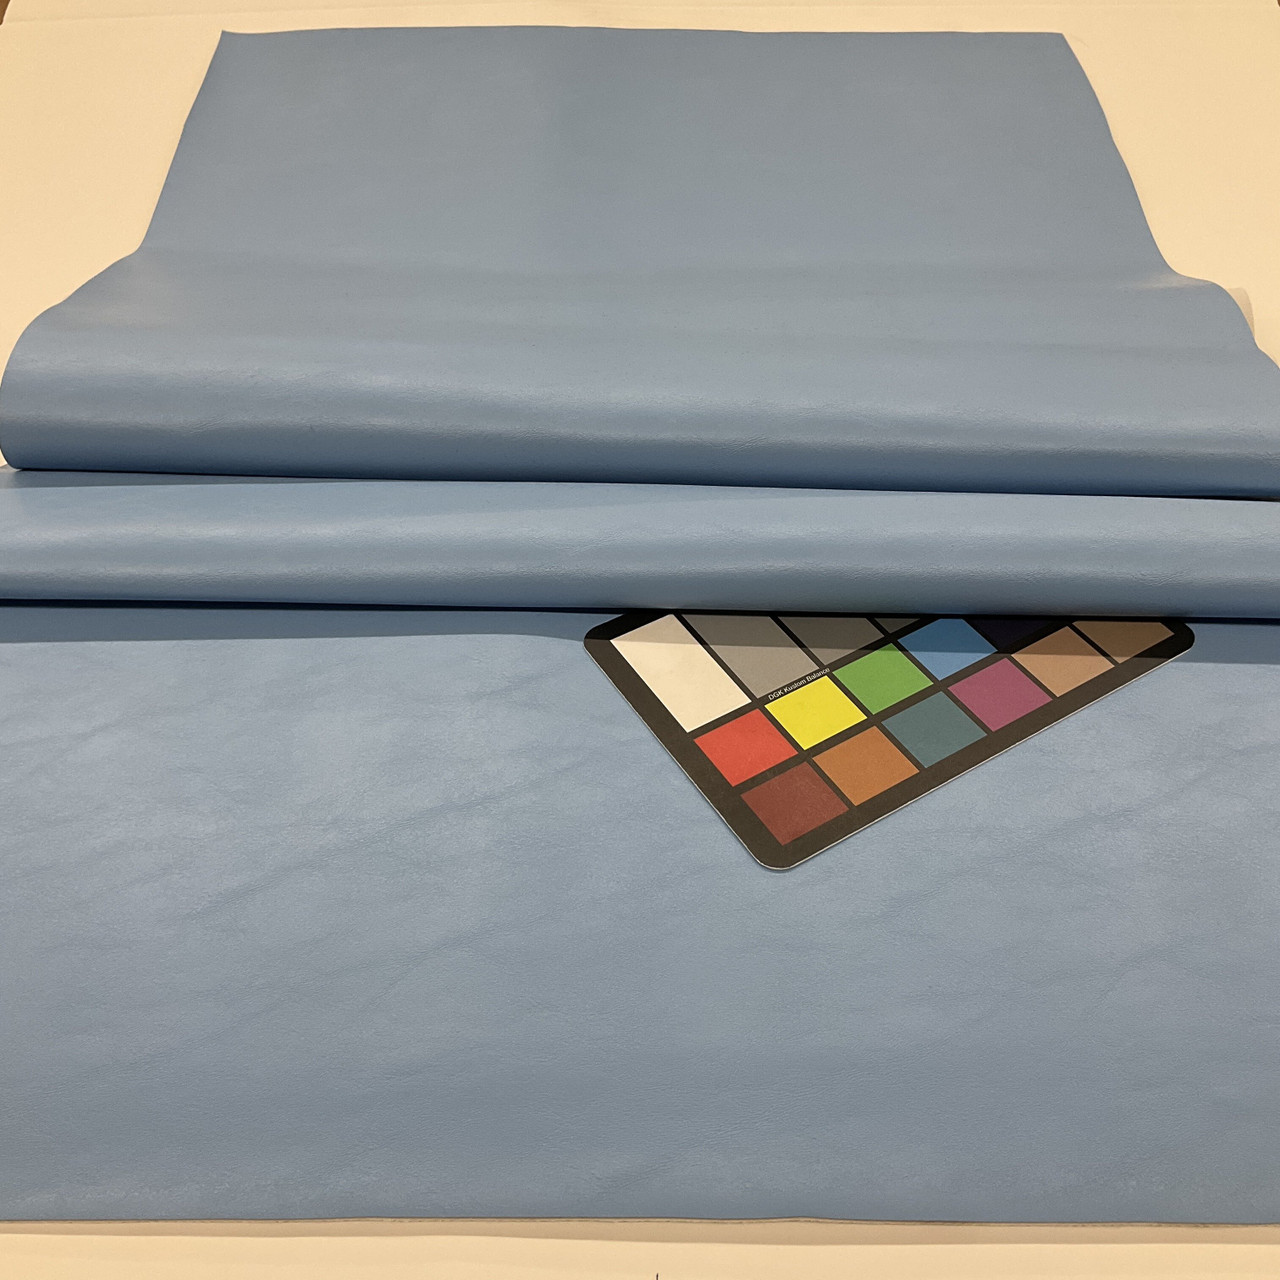 Baby Blue Marine Vinyl Fabric, ISL-9156, Spradling Softside ISLANDER, Upholstery  Vinyl for Boats / Automotive / Commercial Seating, 54W